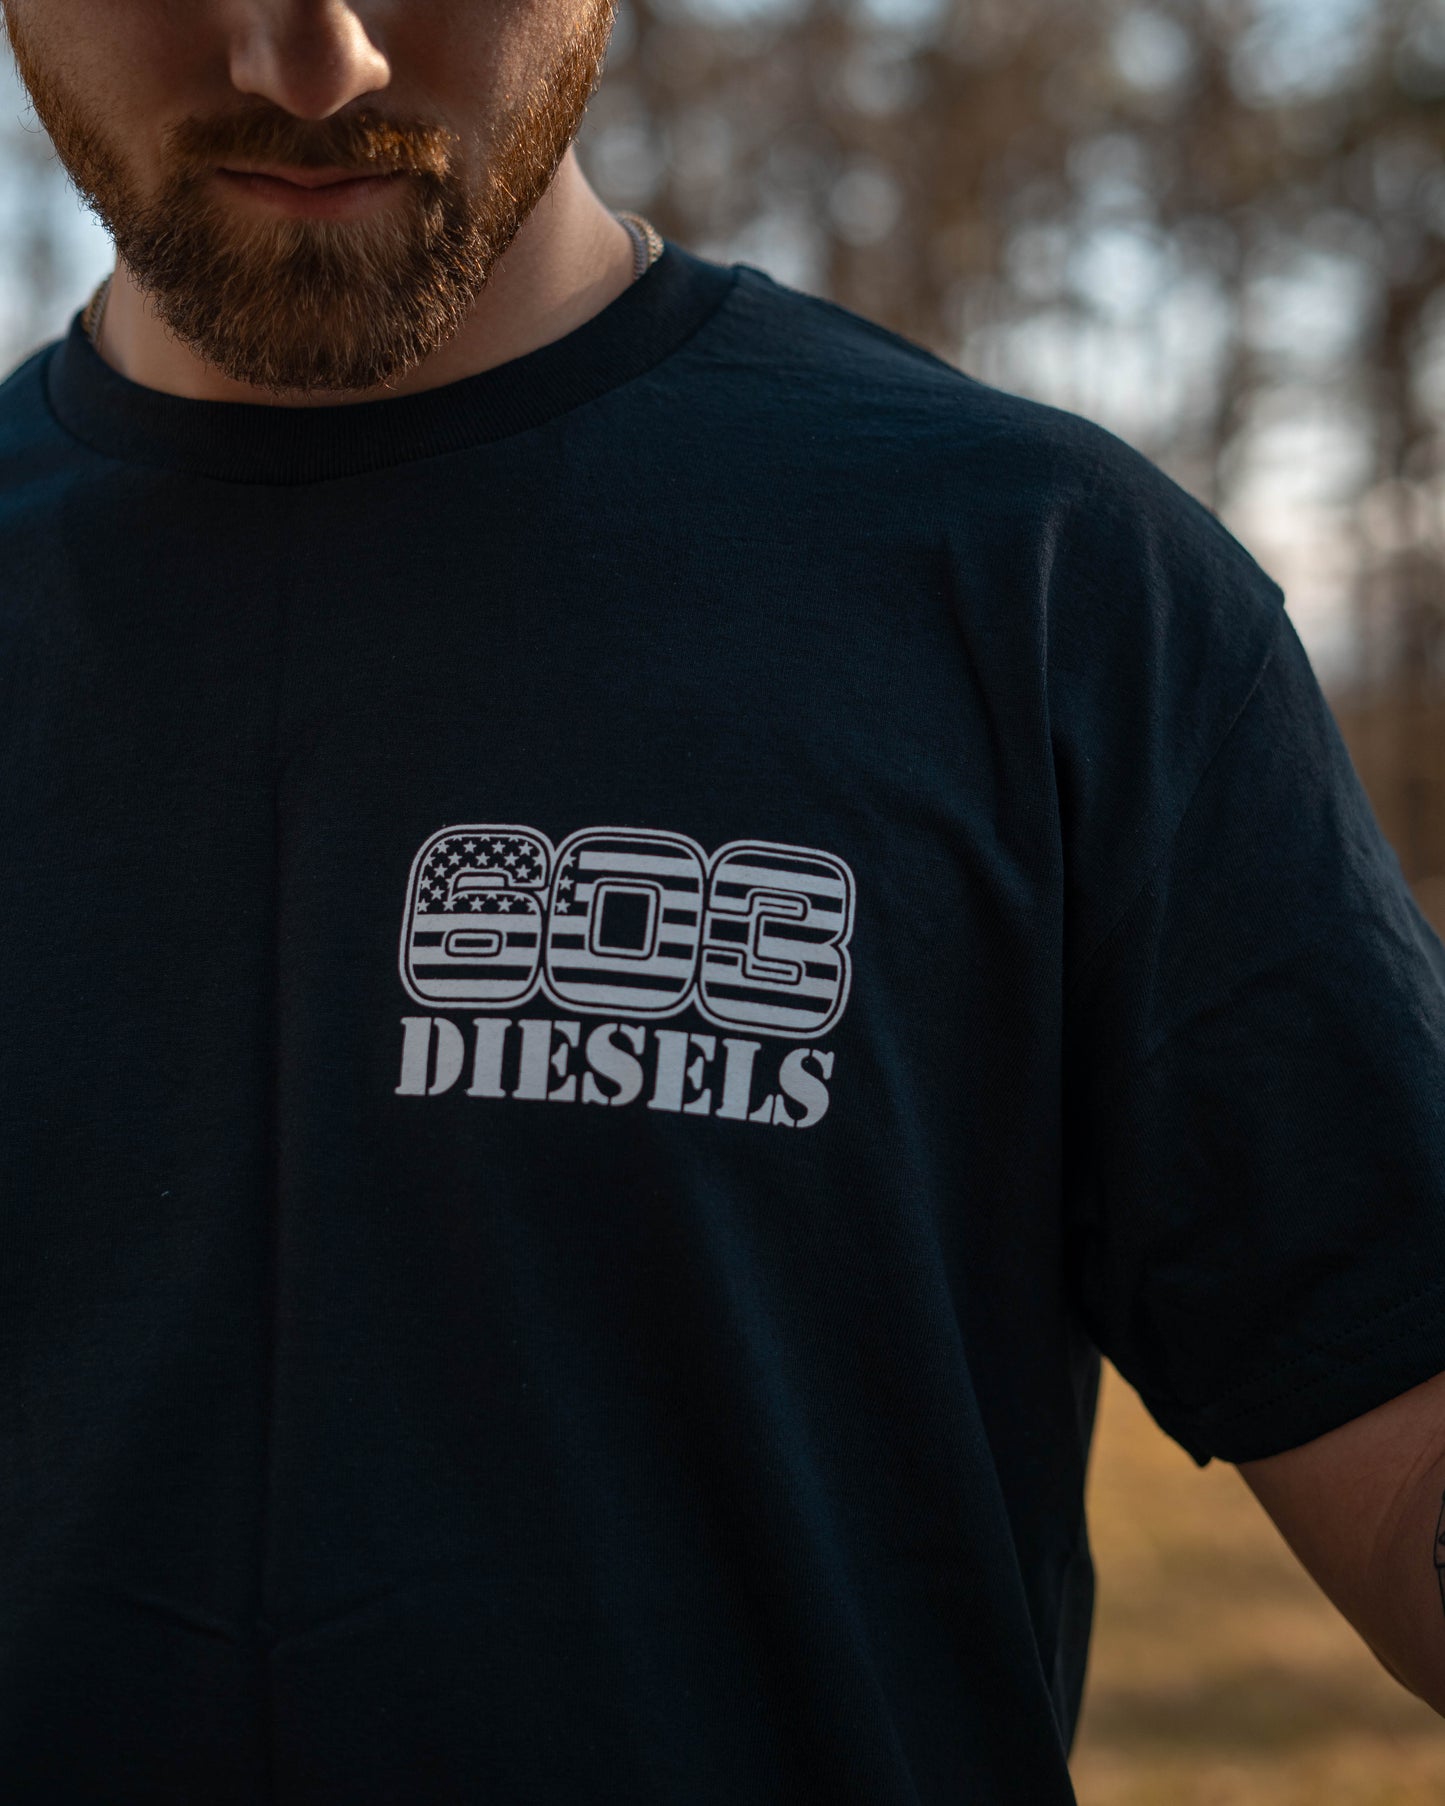 603 Diesels Logo Tshirt